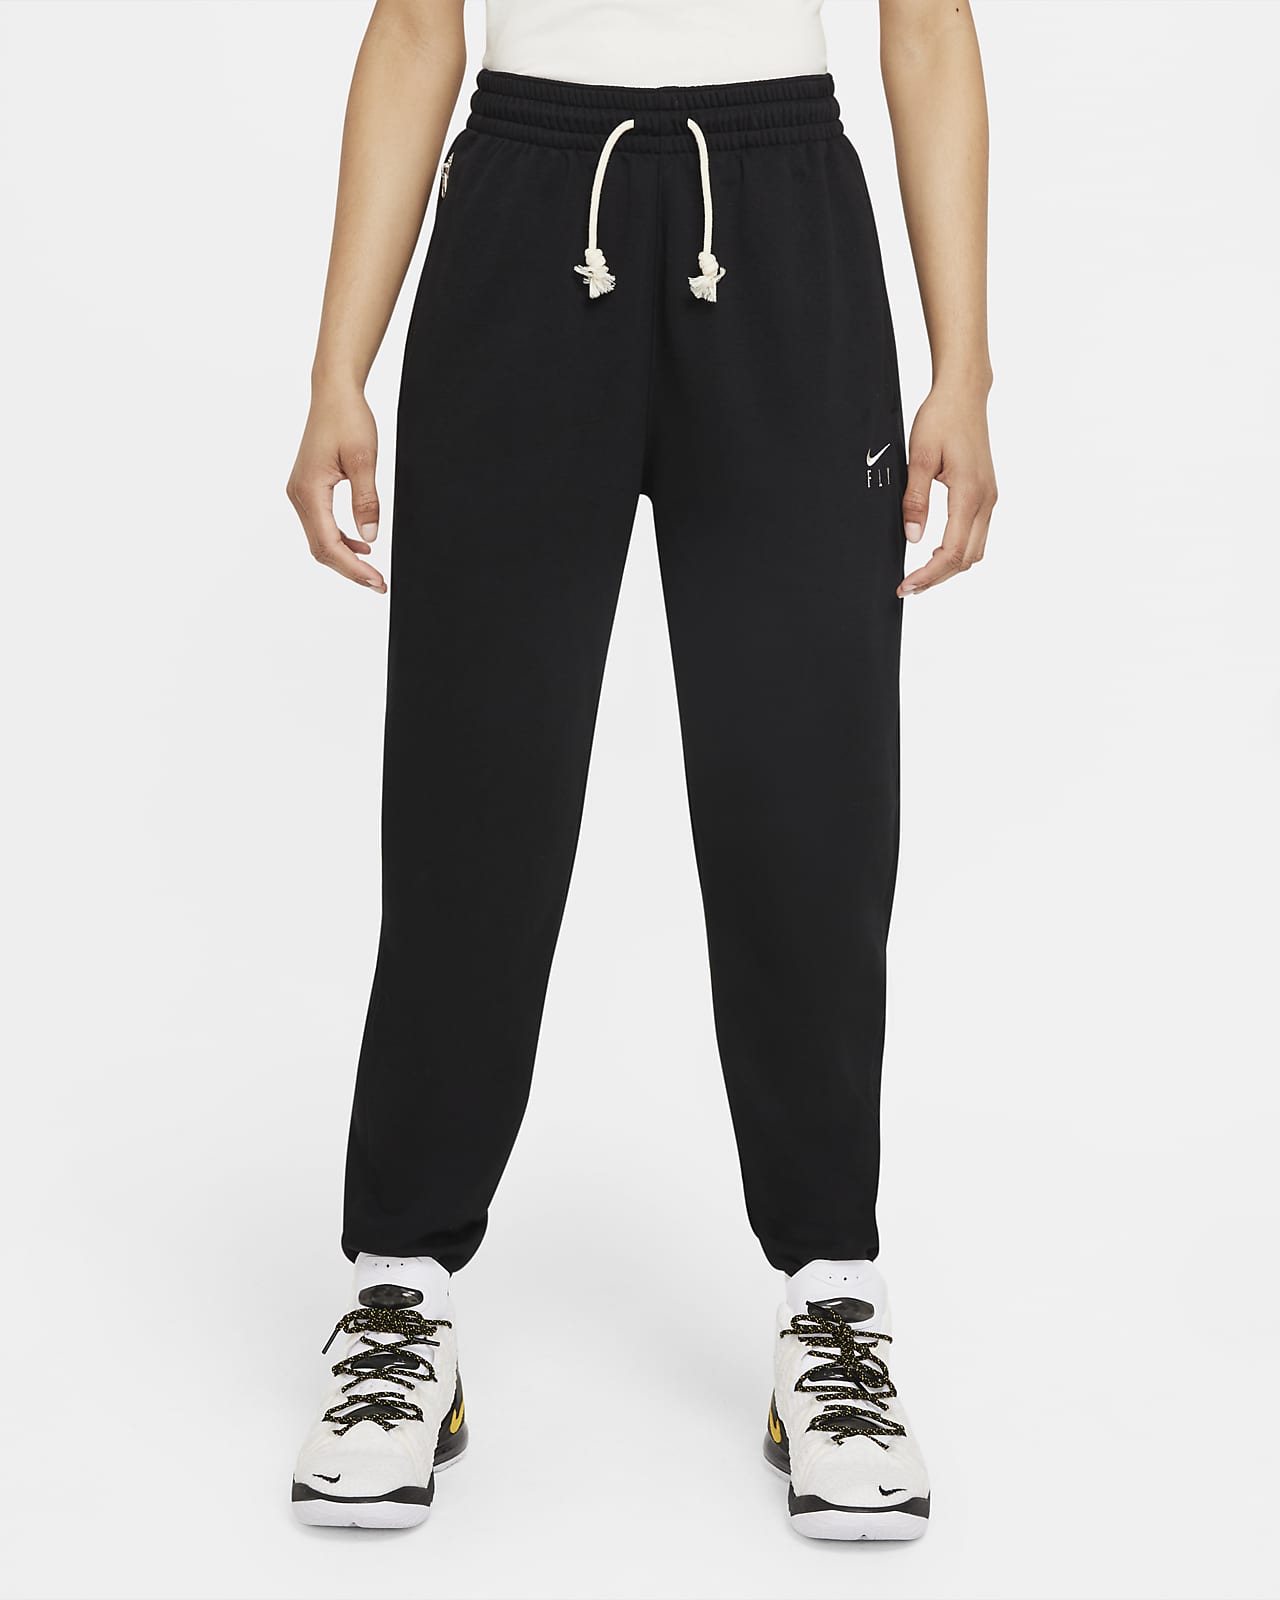 Nike Womens Drawstring Hem Work Out Athletic Pants Black S